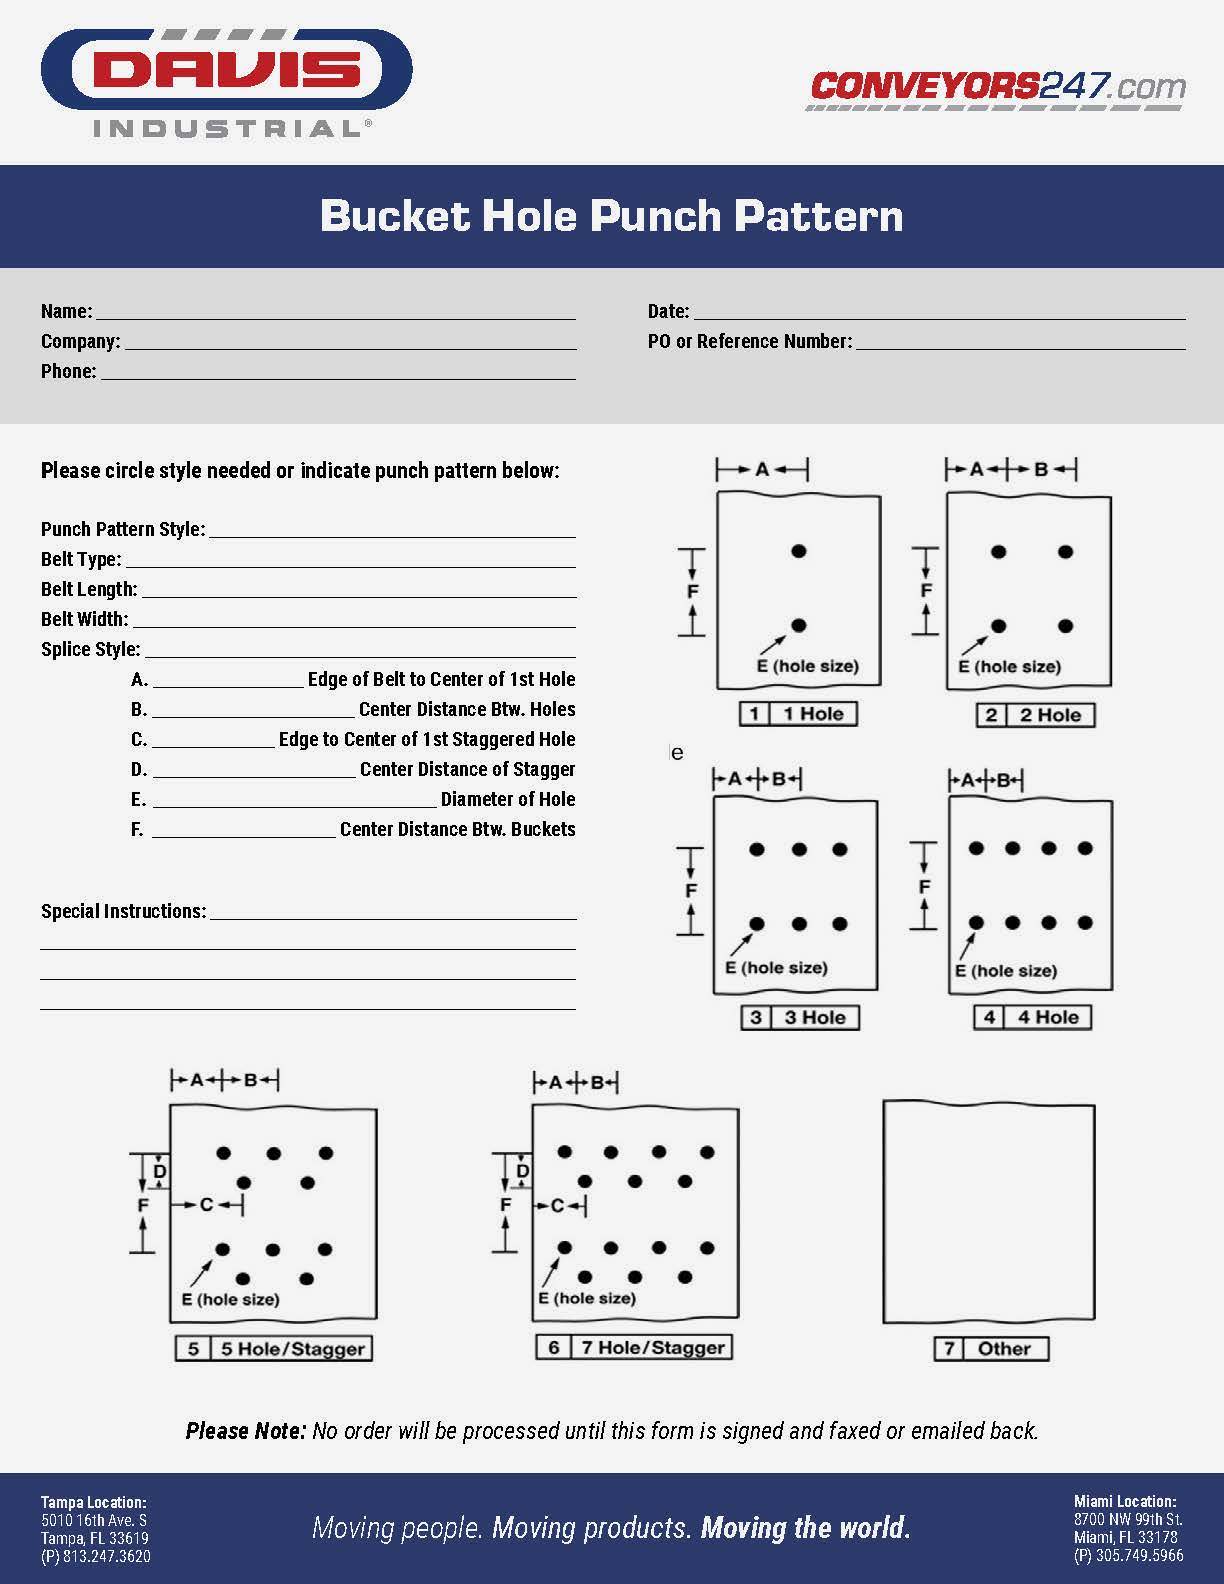 Davis_Bucket Hole Punch Pattern_Form